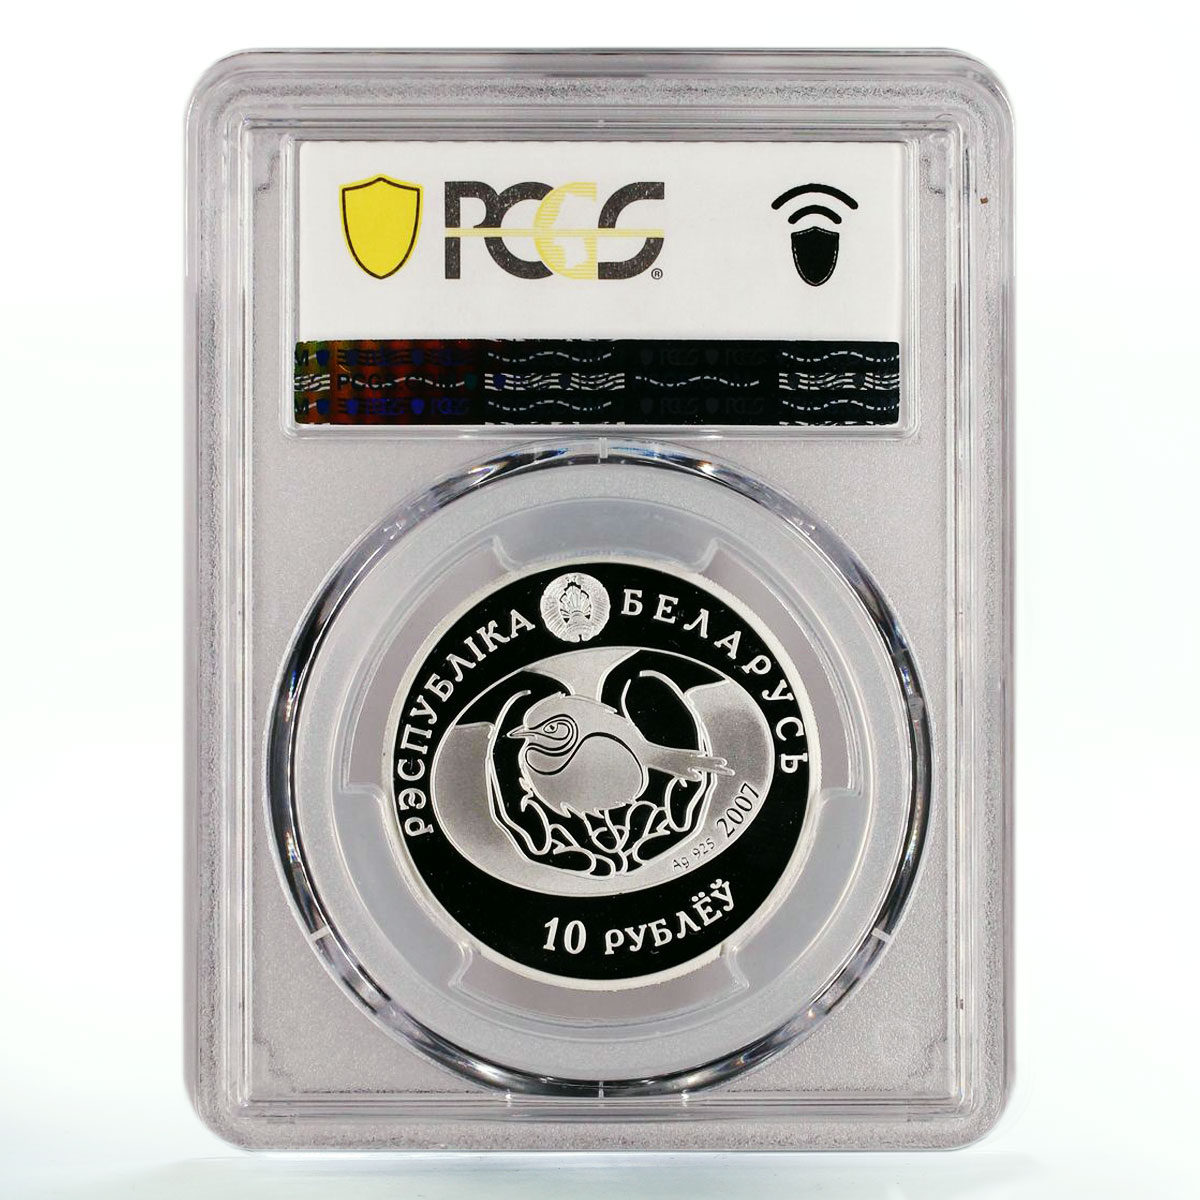 Belarus 10 rubles Conservation Thrush Nightingale Bird PR70 PCGS Ag coin 2007